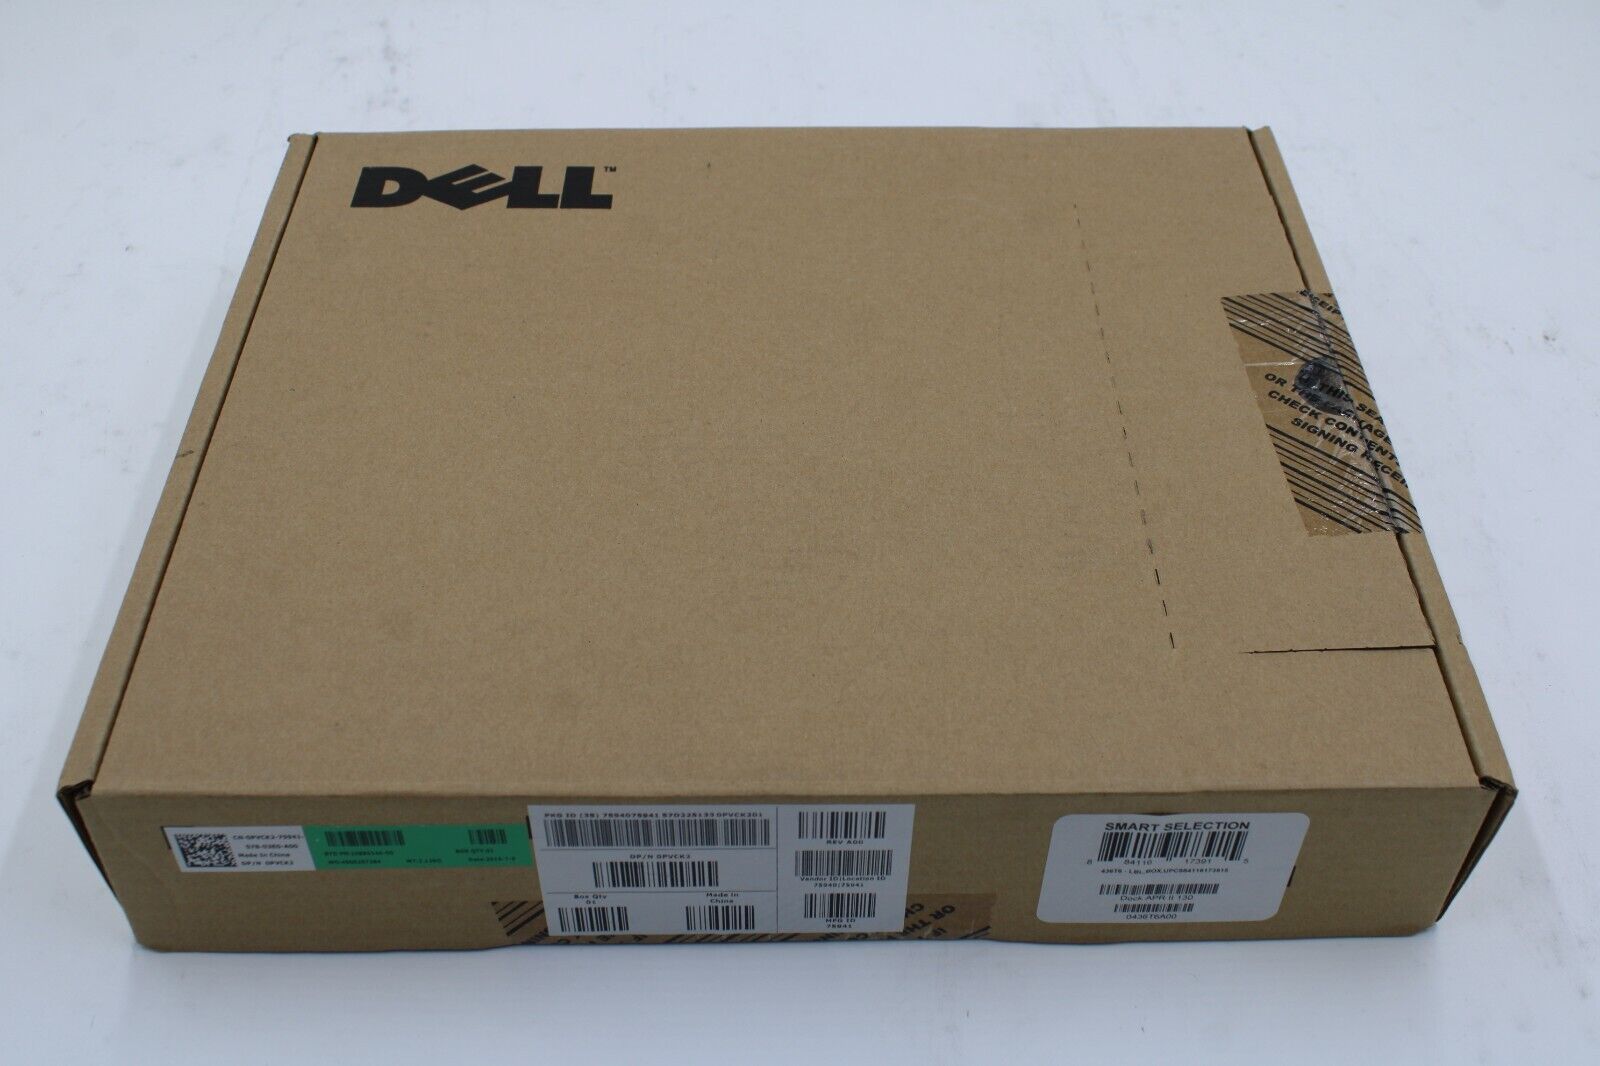 New Open Box Dell 0PVCK2 APR 2 130 E-PORT Plus Docking Station